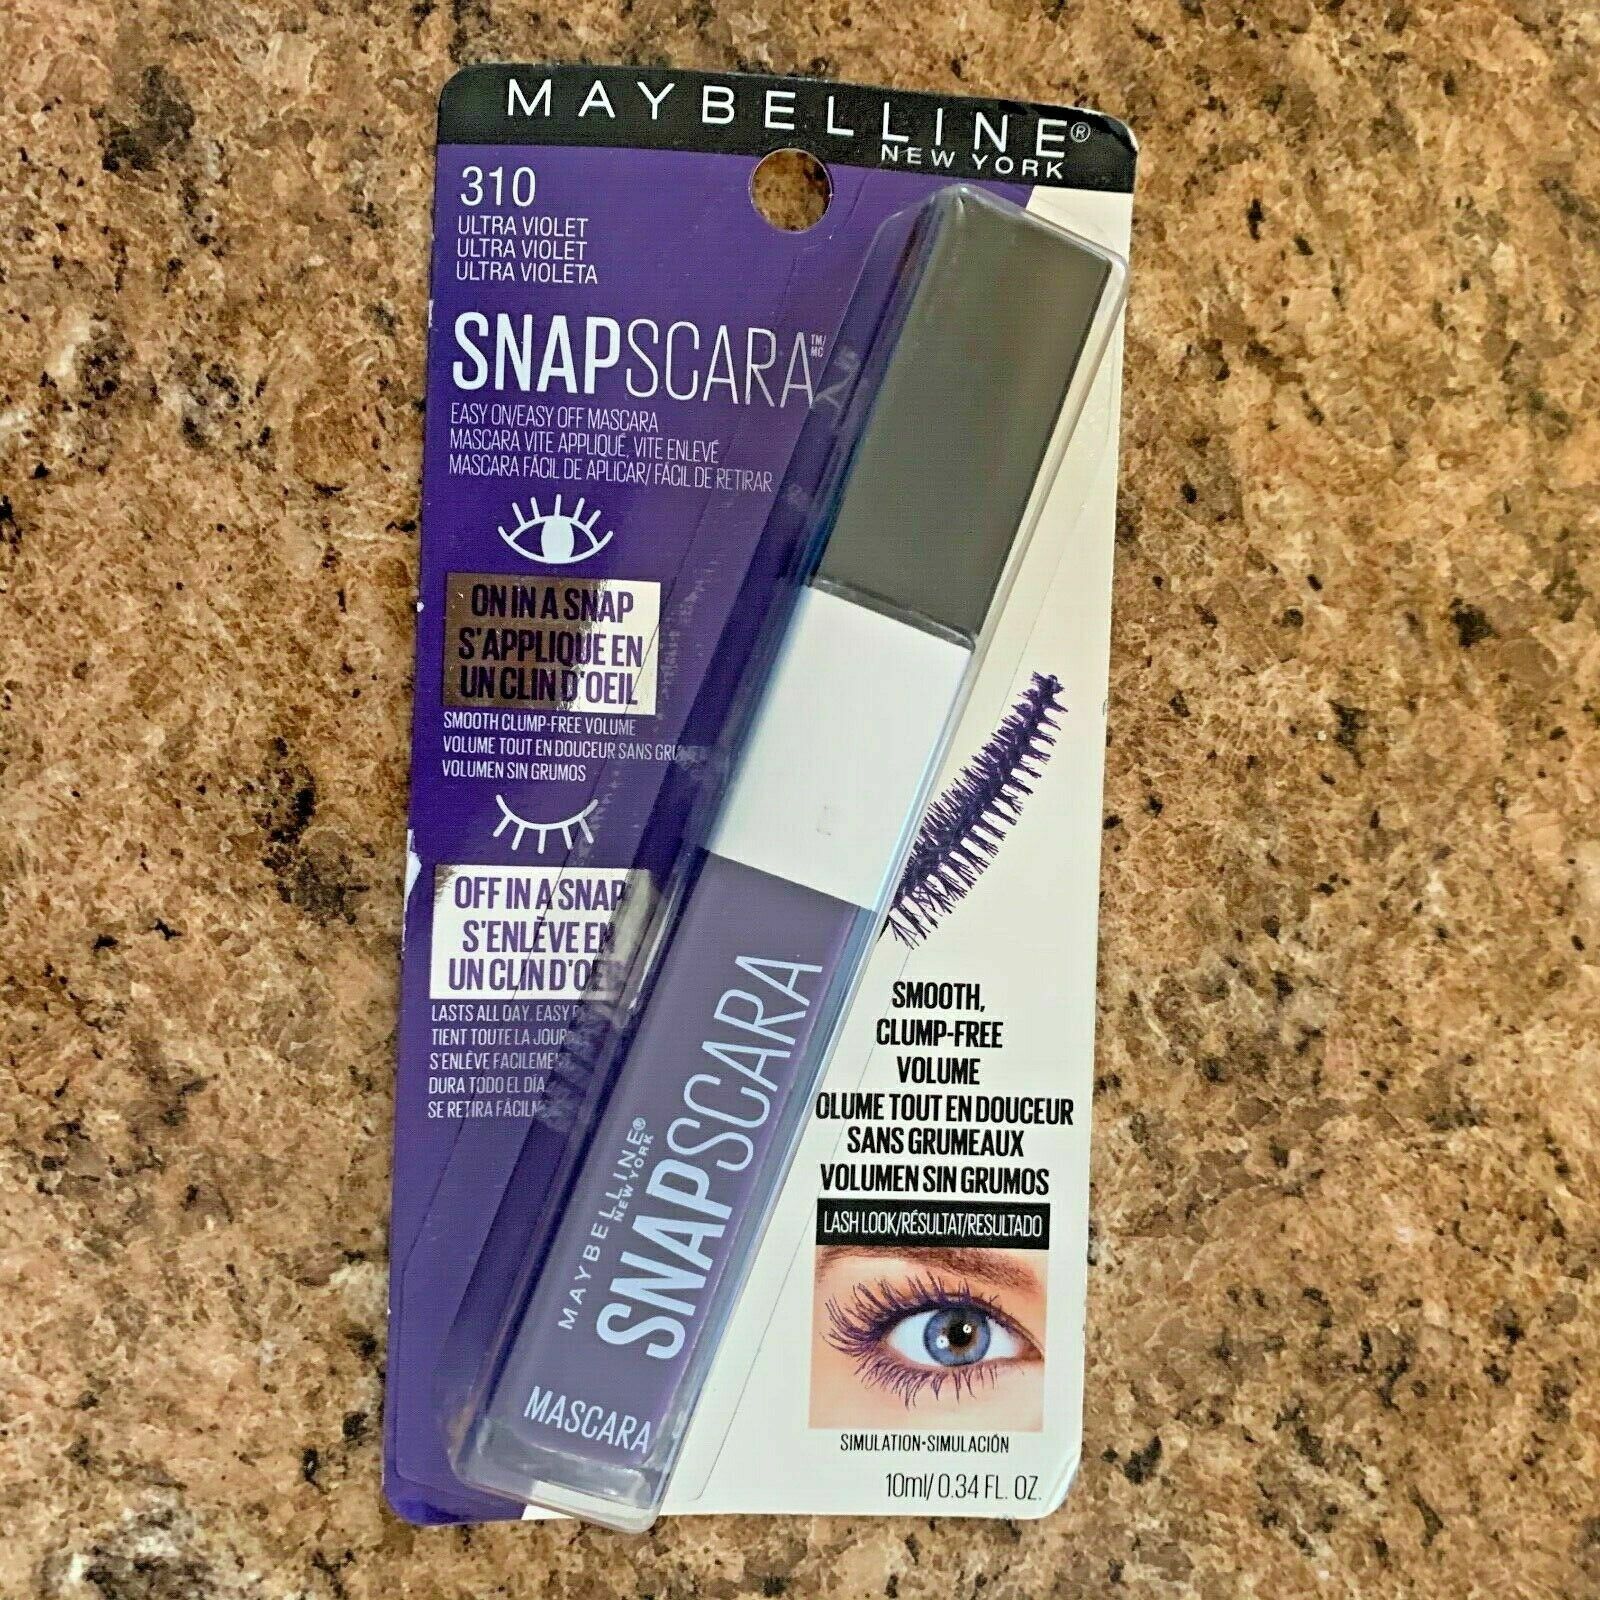 Maybelline NY Snapscara Mascara 310 Ultra Violet Easy on Easy off